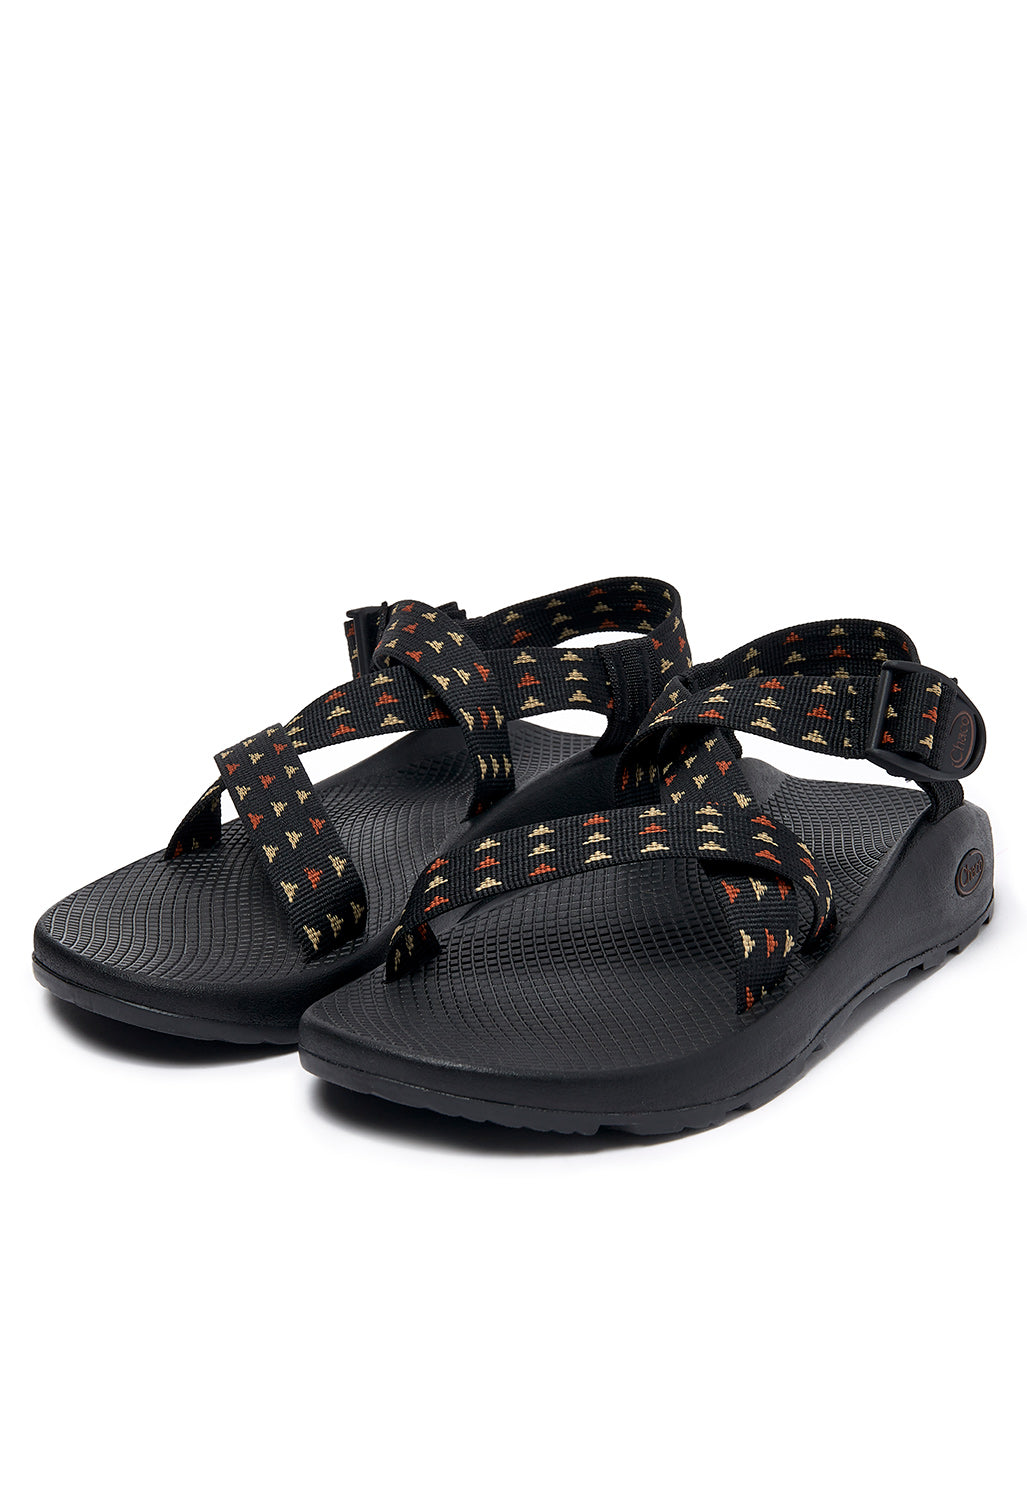 Chaco Men's Z1 Classic Sandals - Sierra Black